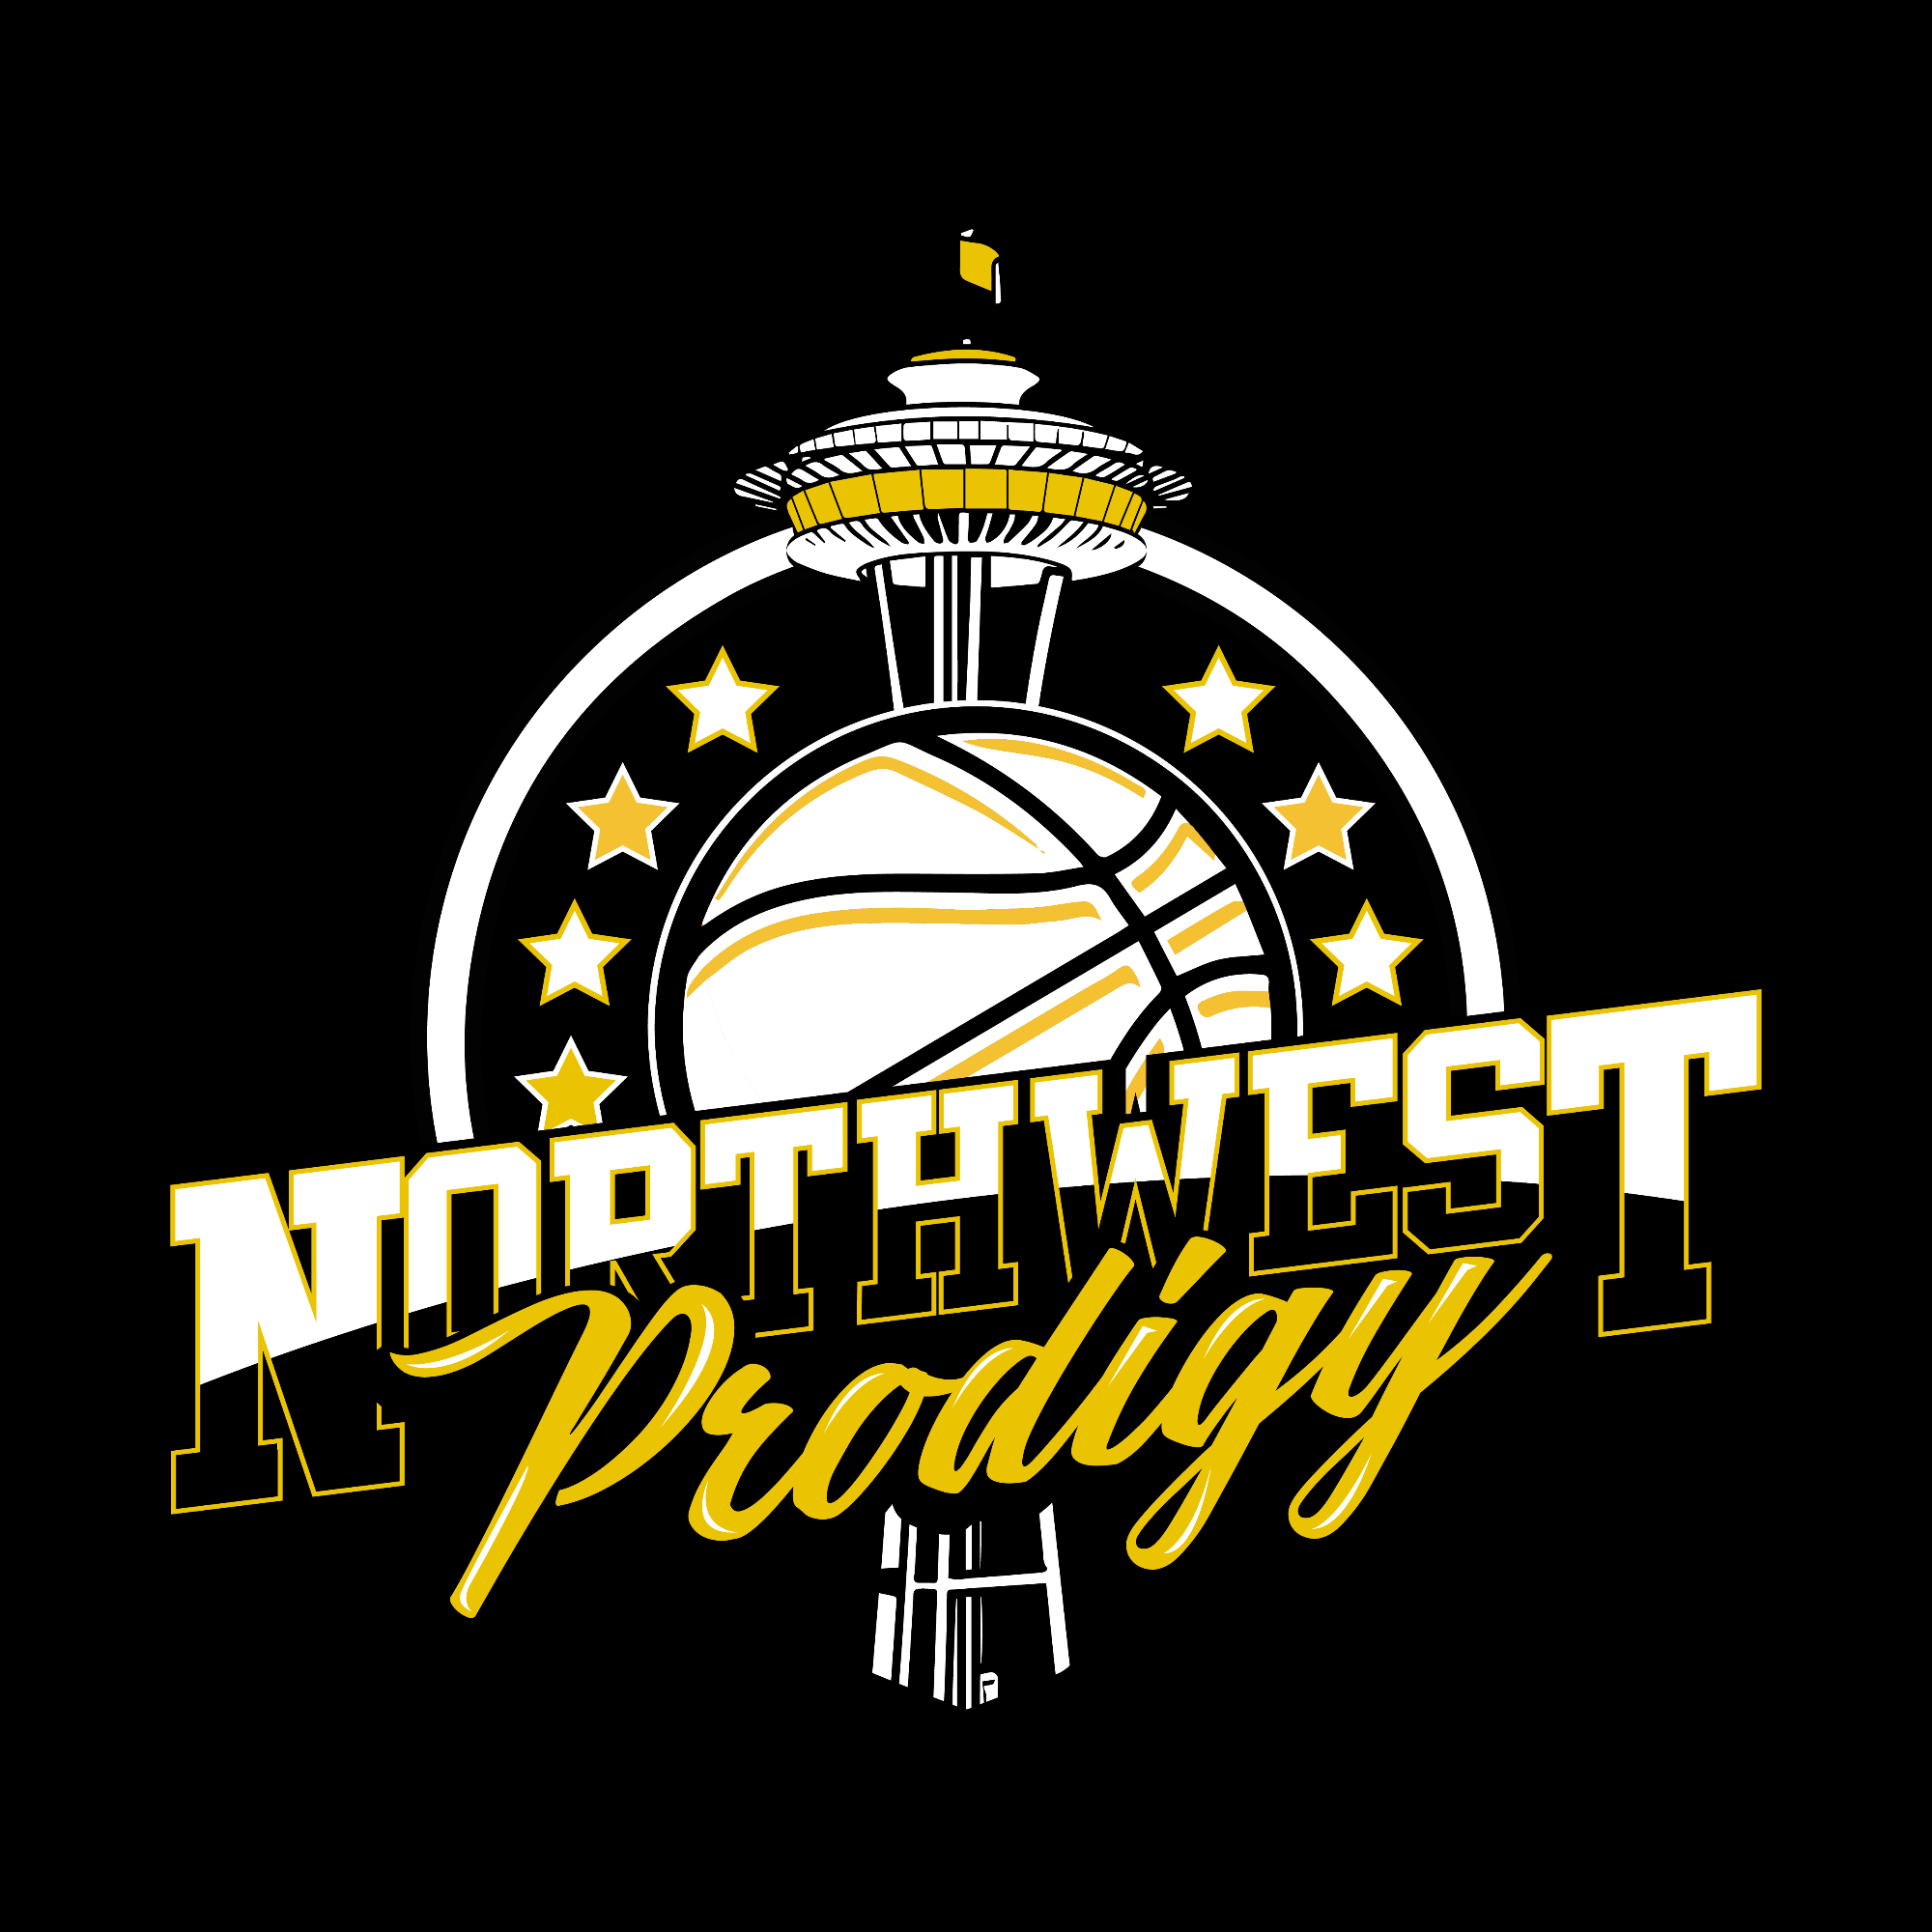 Organization logo for Northwest Prodigy